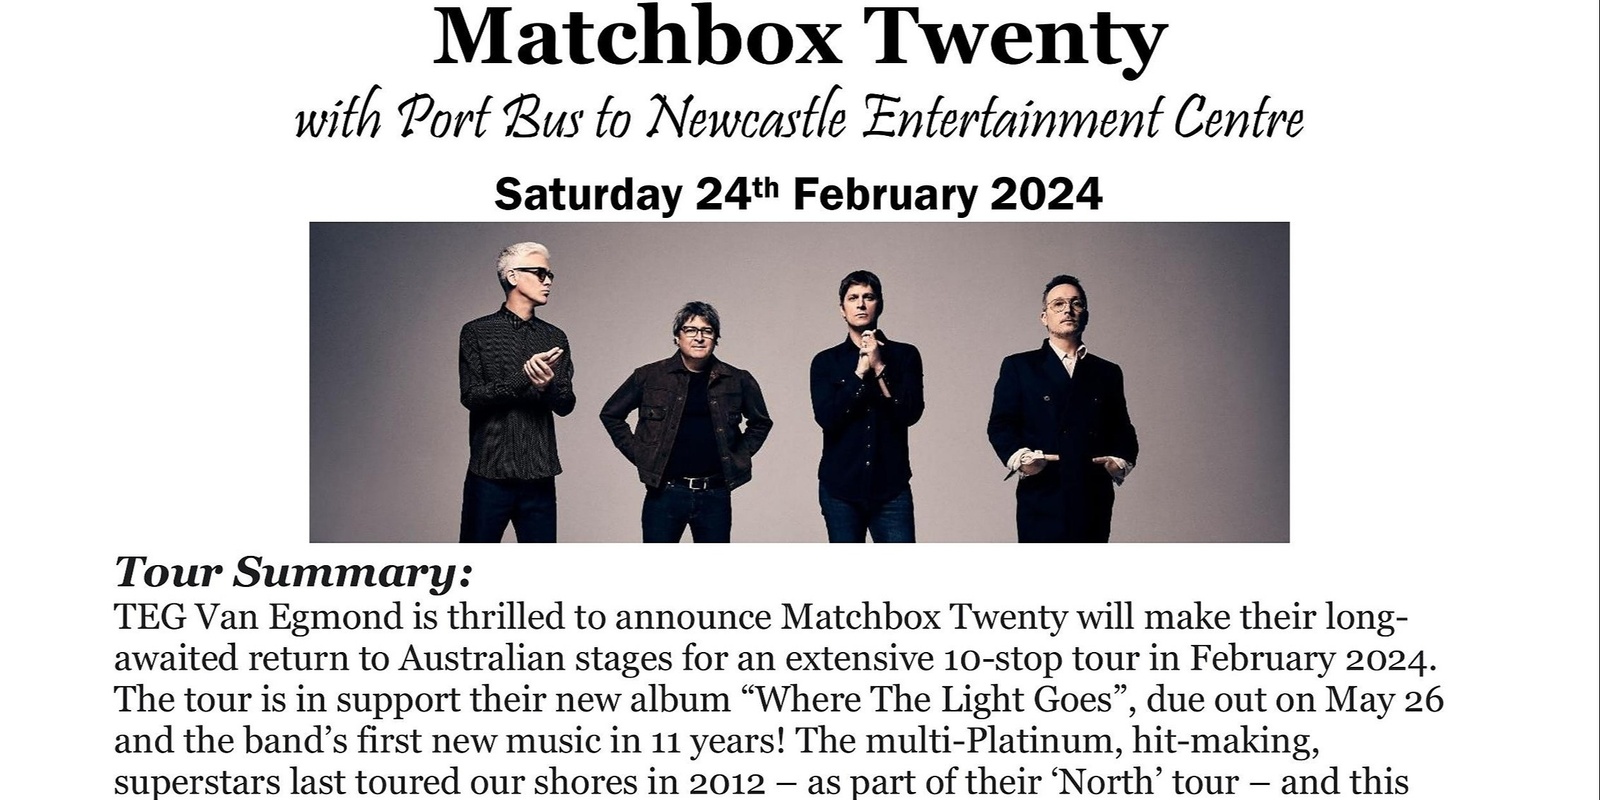 Banner image for Matchbox Twenty with Port Bus